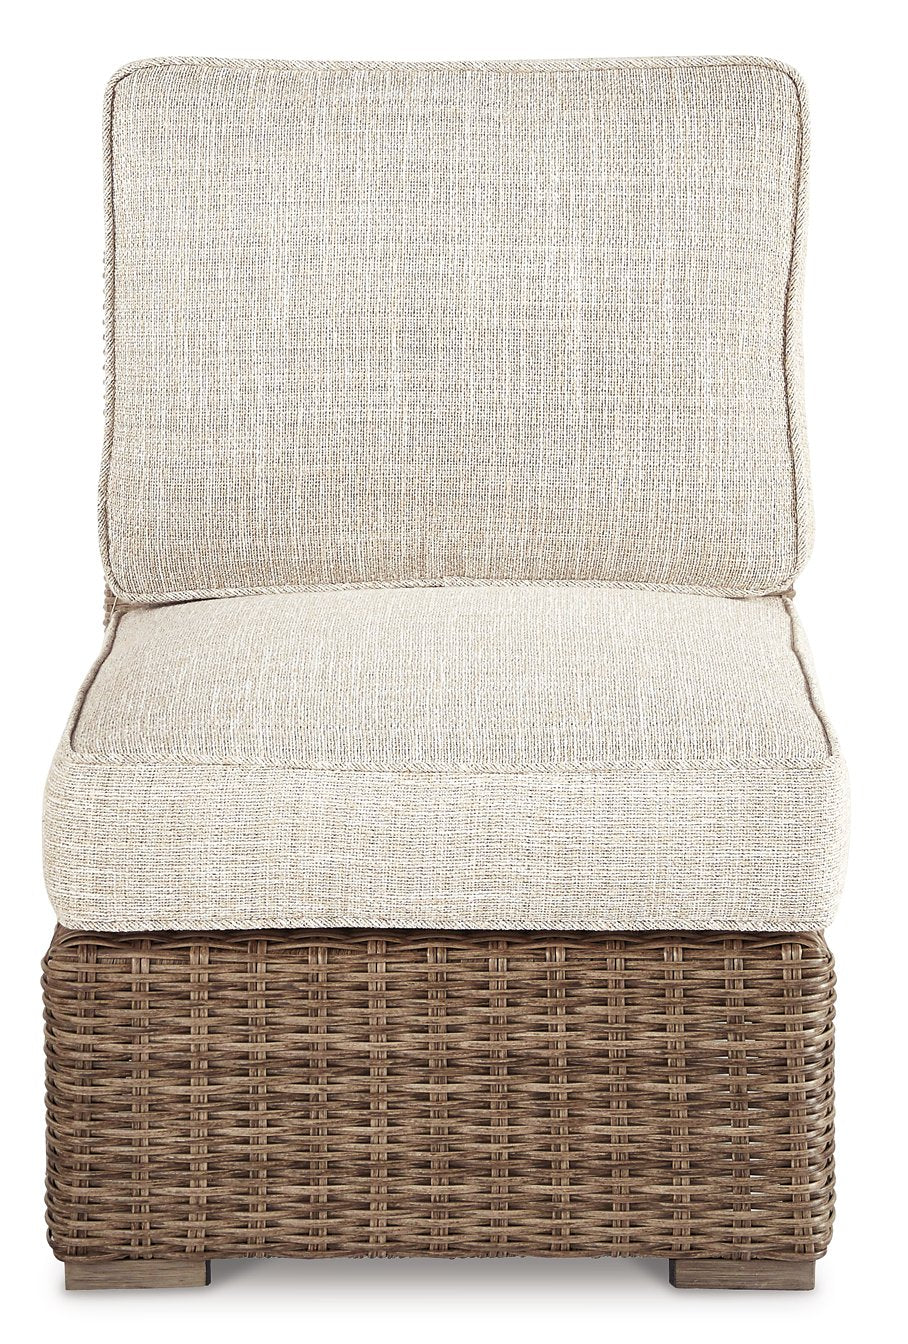 Beachcroft Armless Chair with Cushion - Half Price Furniture